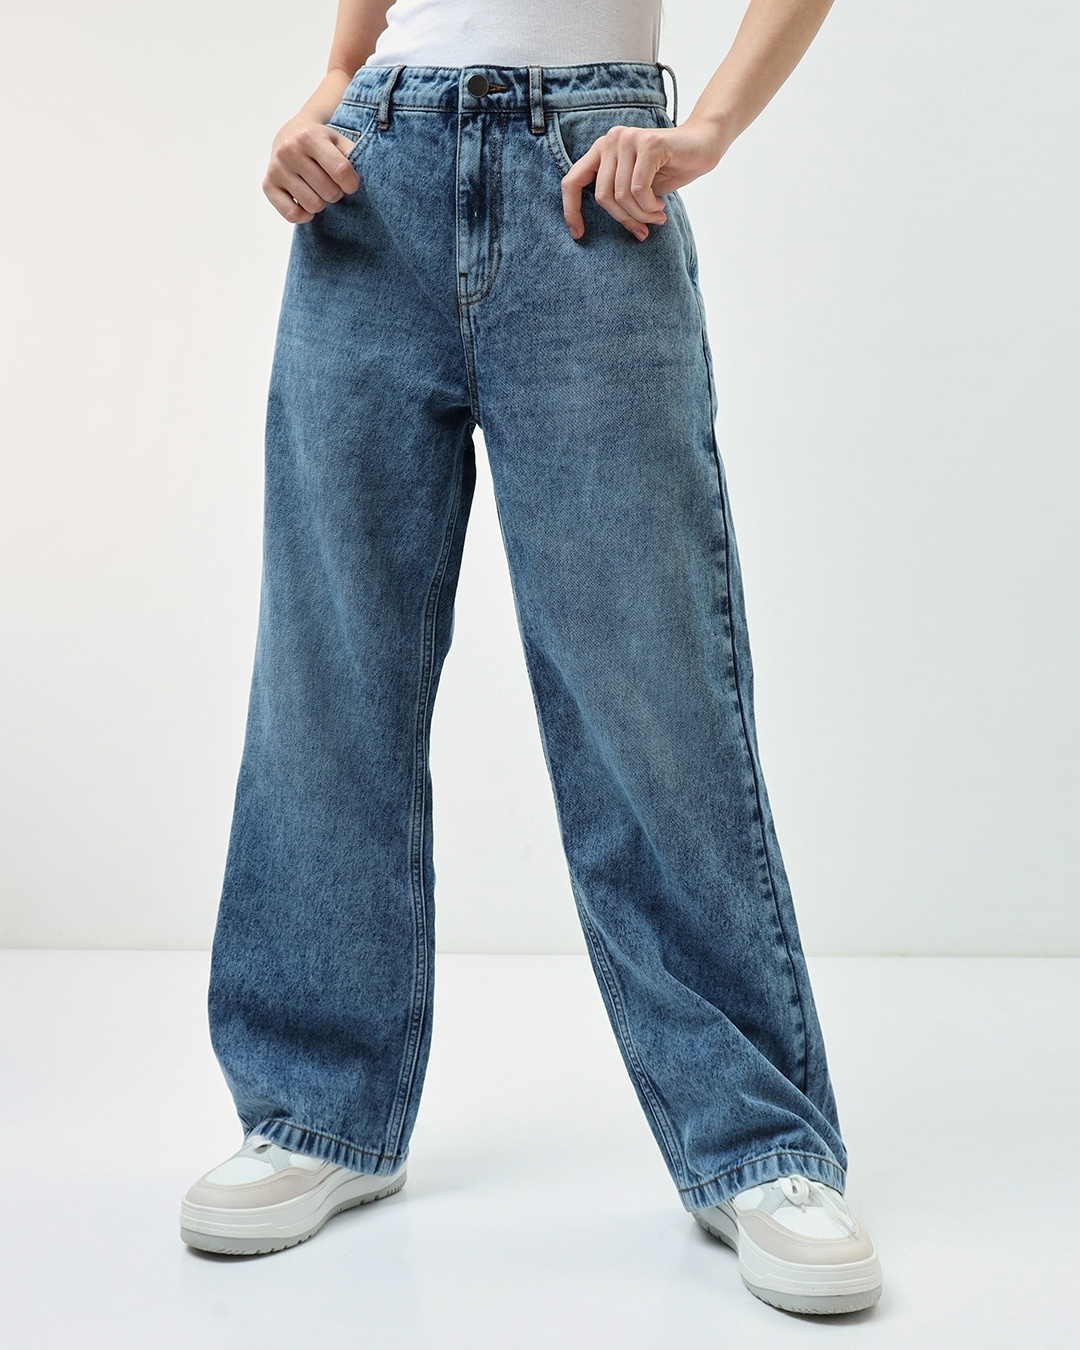 Buy Women's Blue Baggy Wide Leg Jeans Online at Bewakoof